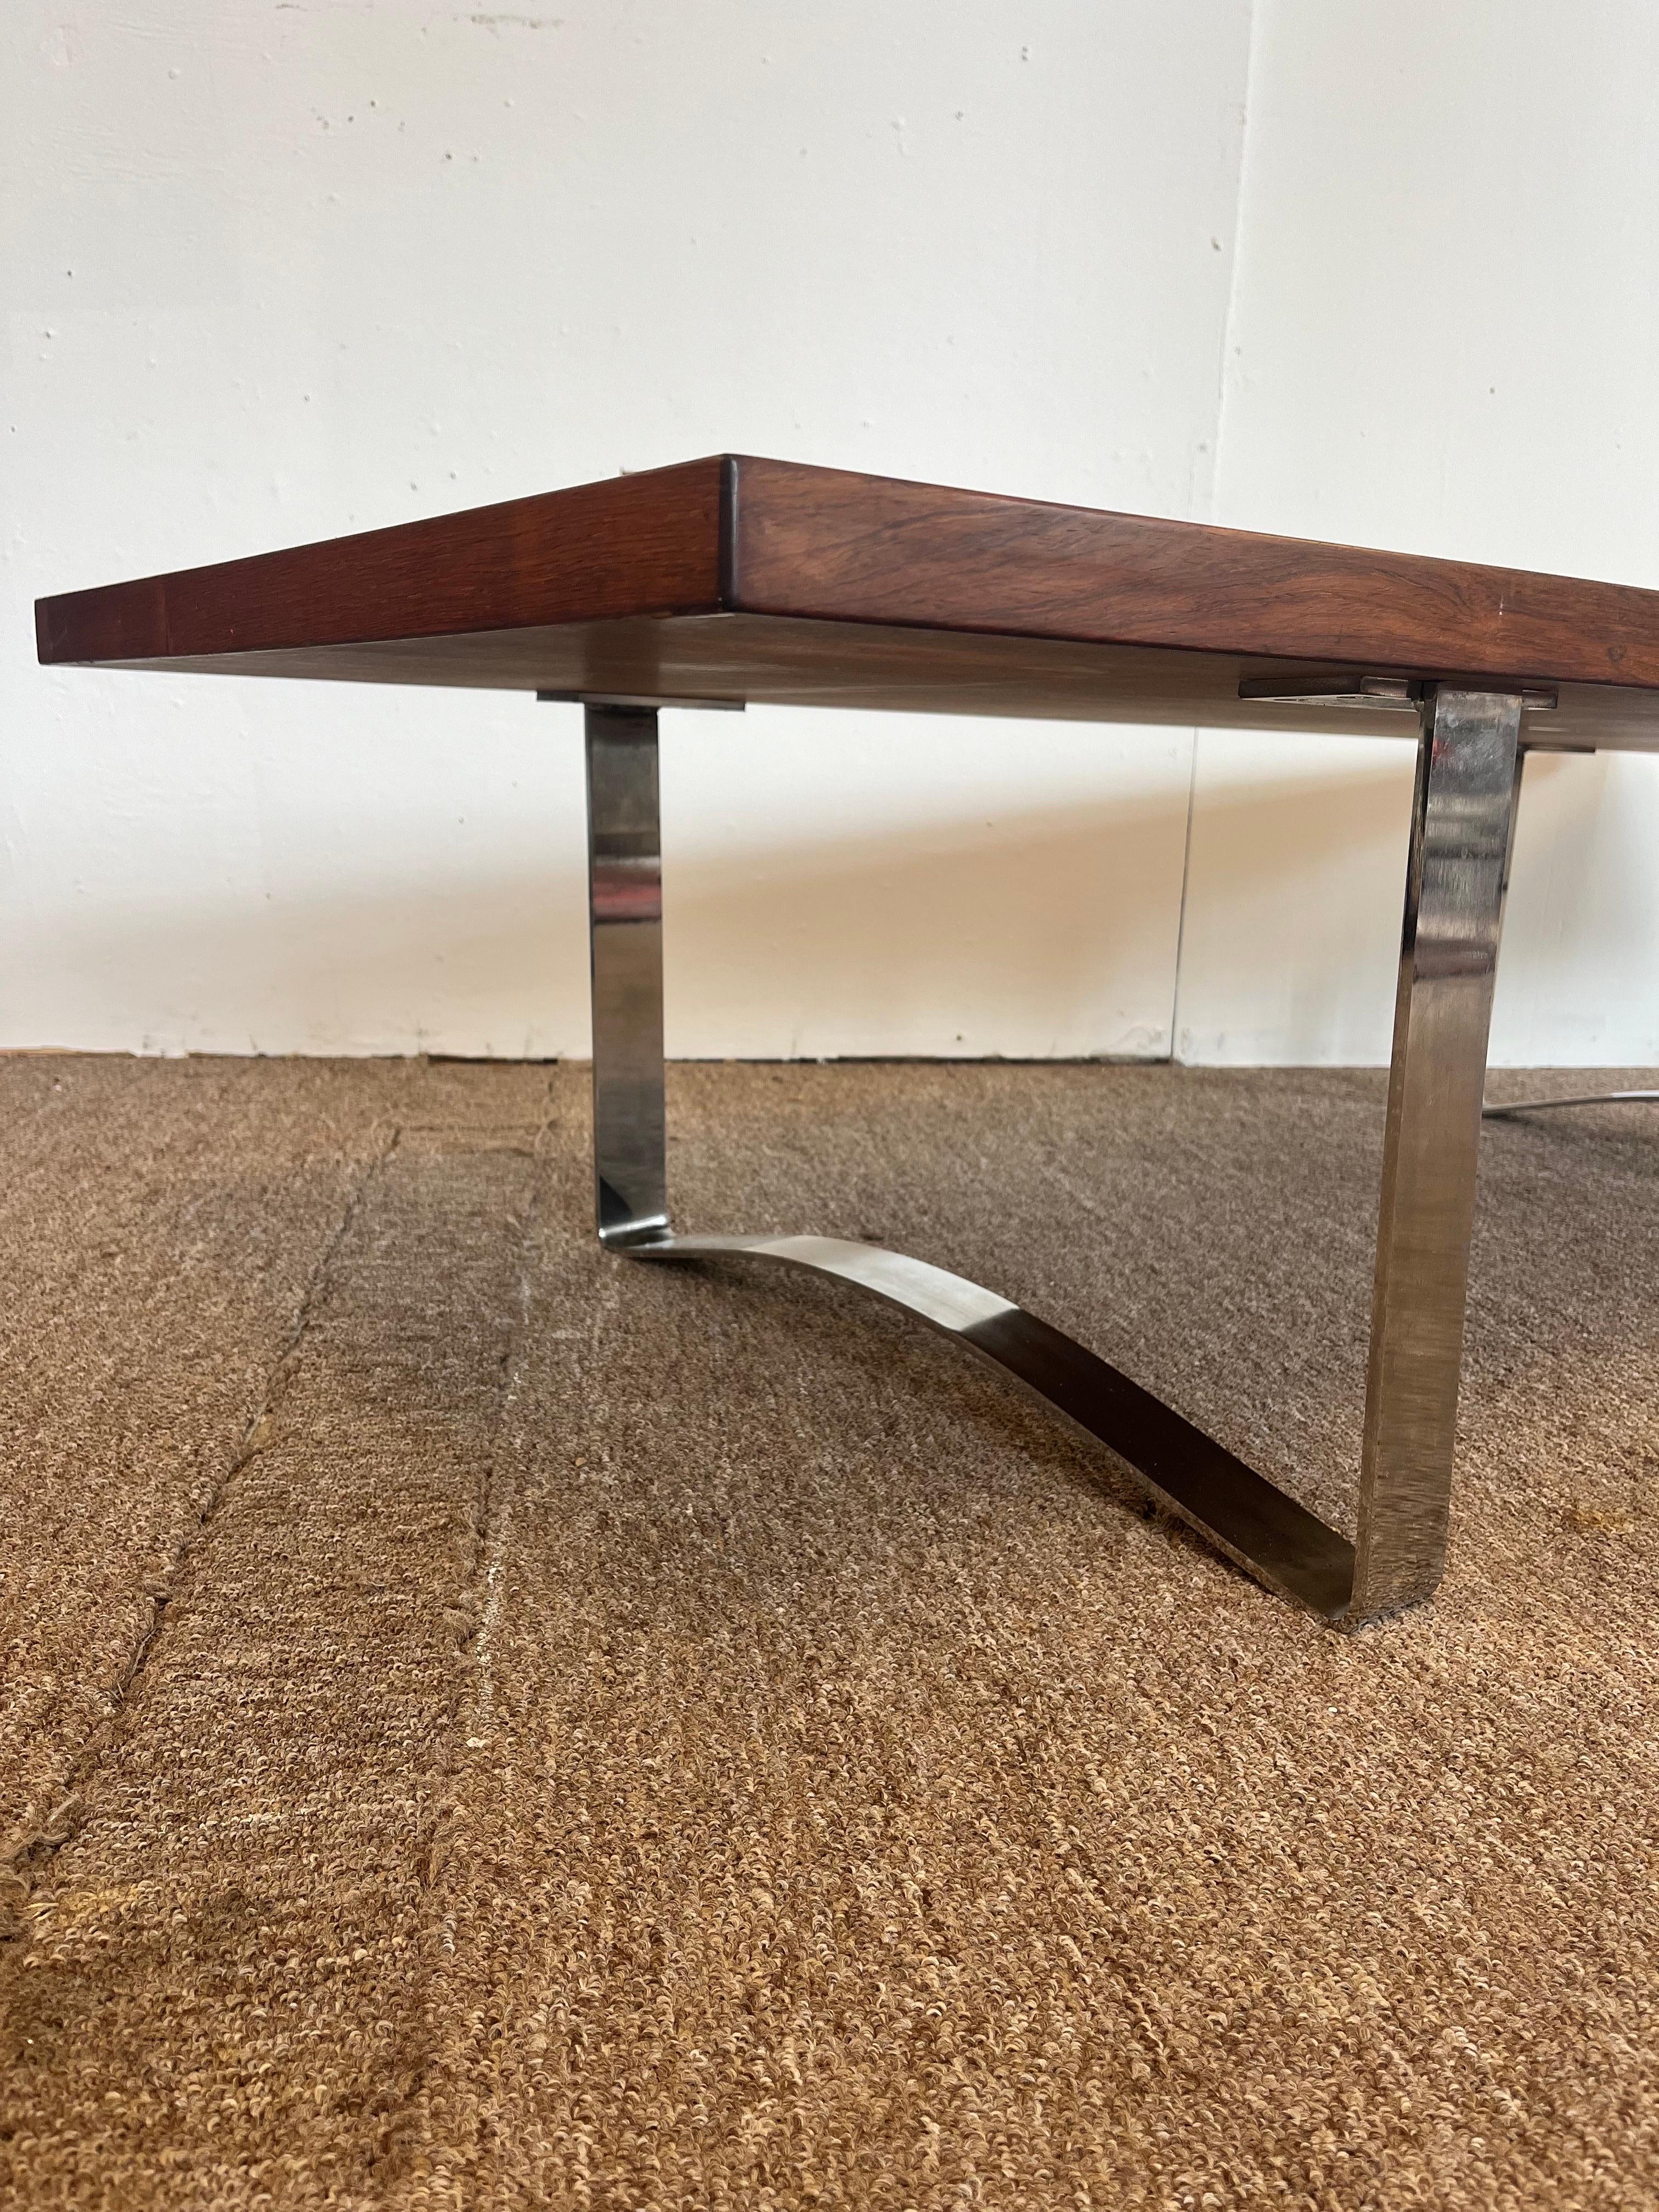 Bodil Kjaer for E. Pedersen Danish Modern Bench or Coffee Table Wood and Chrome For Sale 2